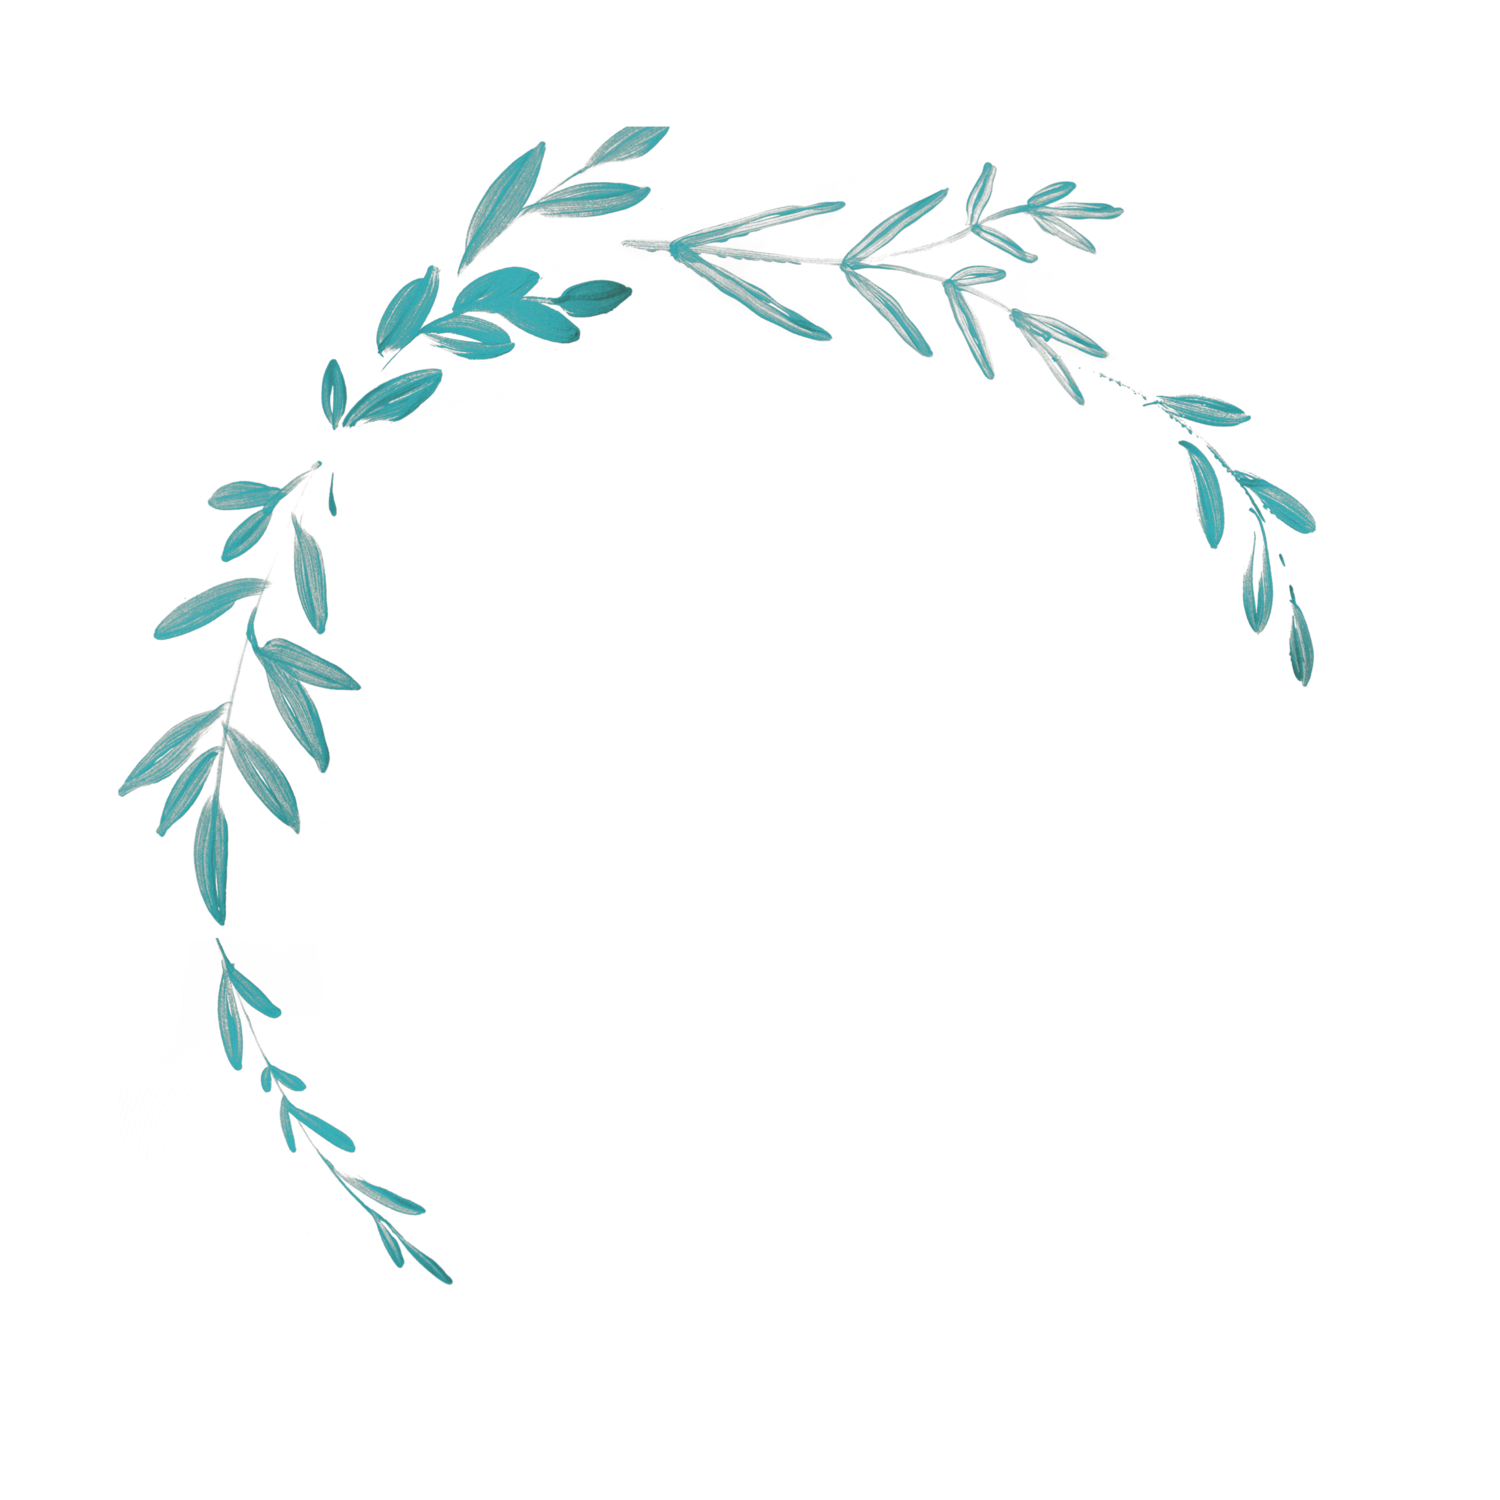 Anissa Moussi Designs